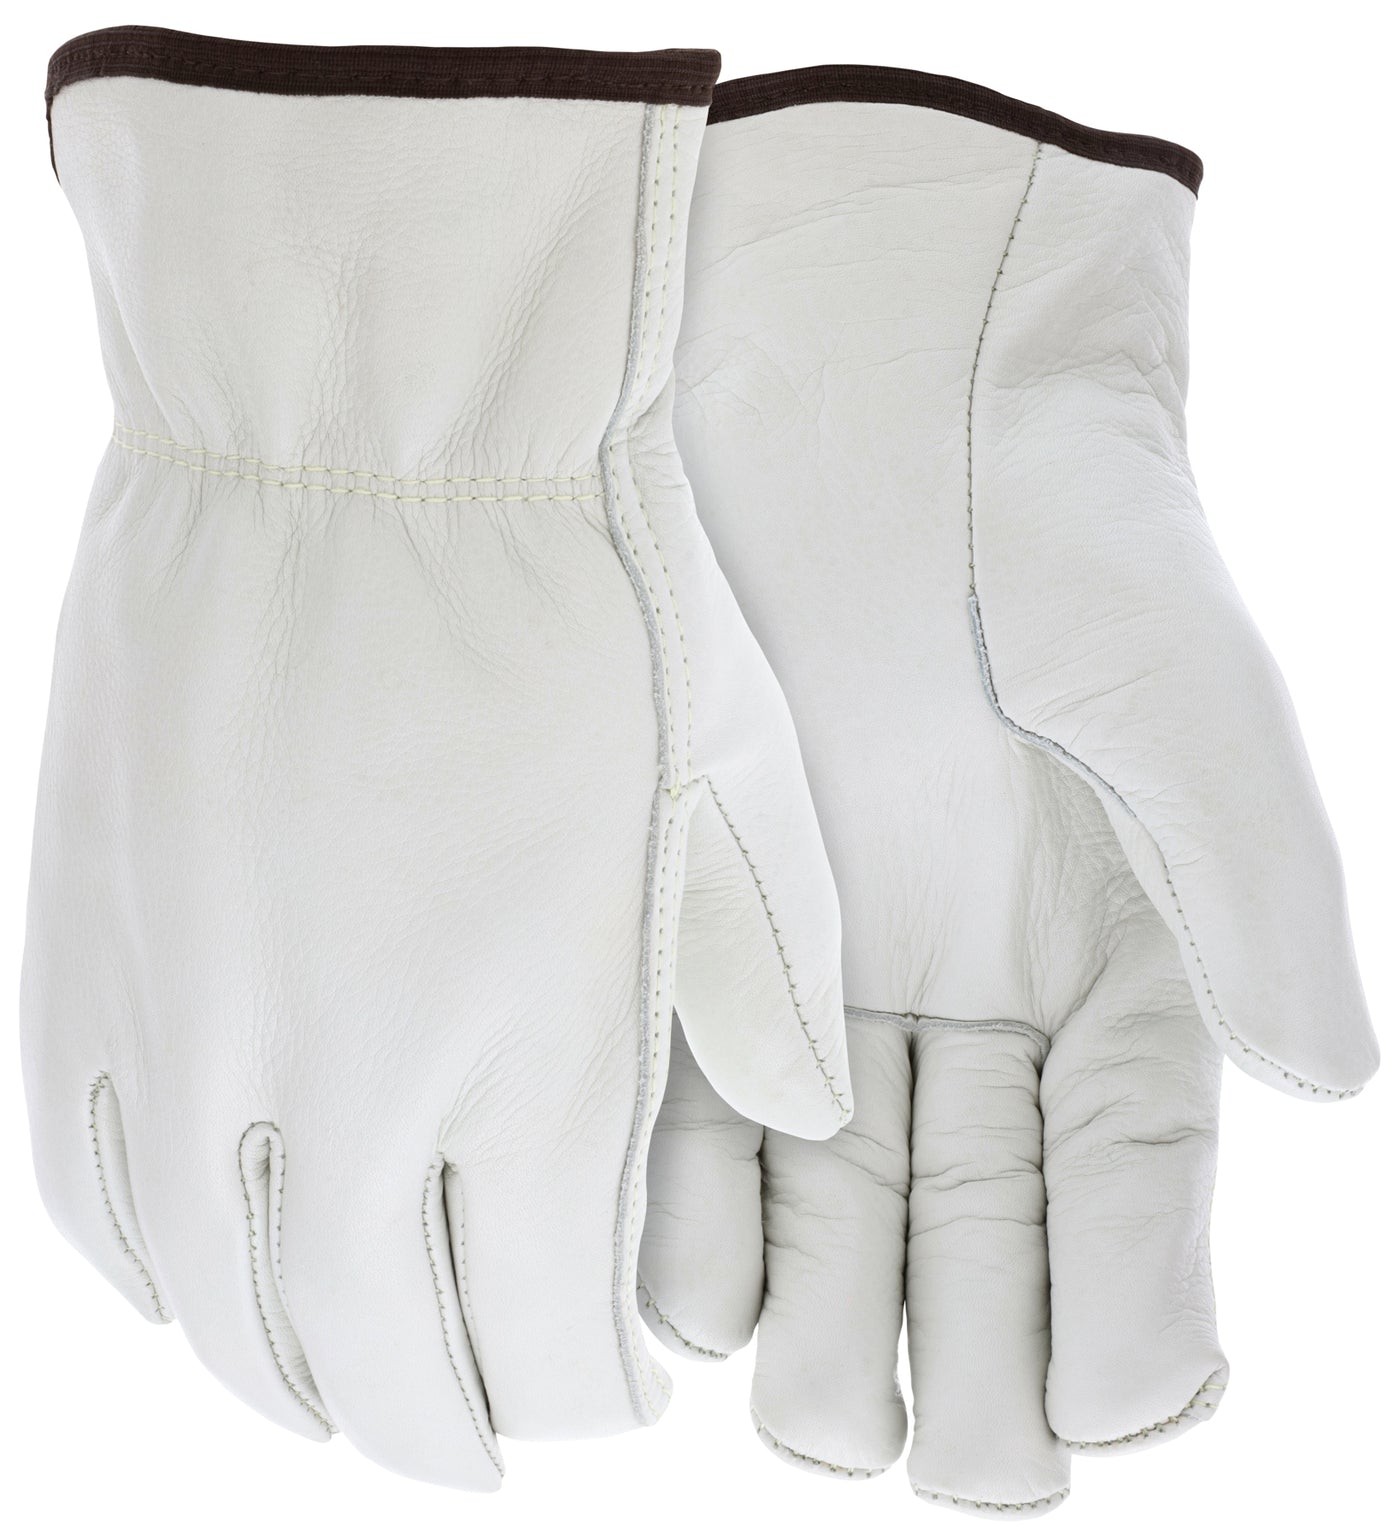 32013T - Insulated Winter Driver Glove